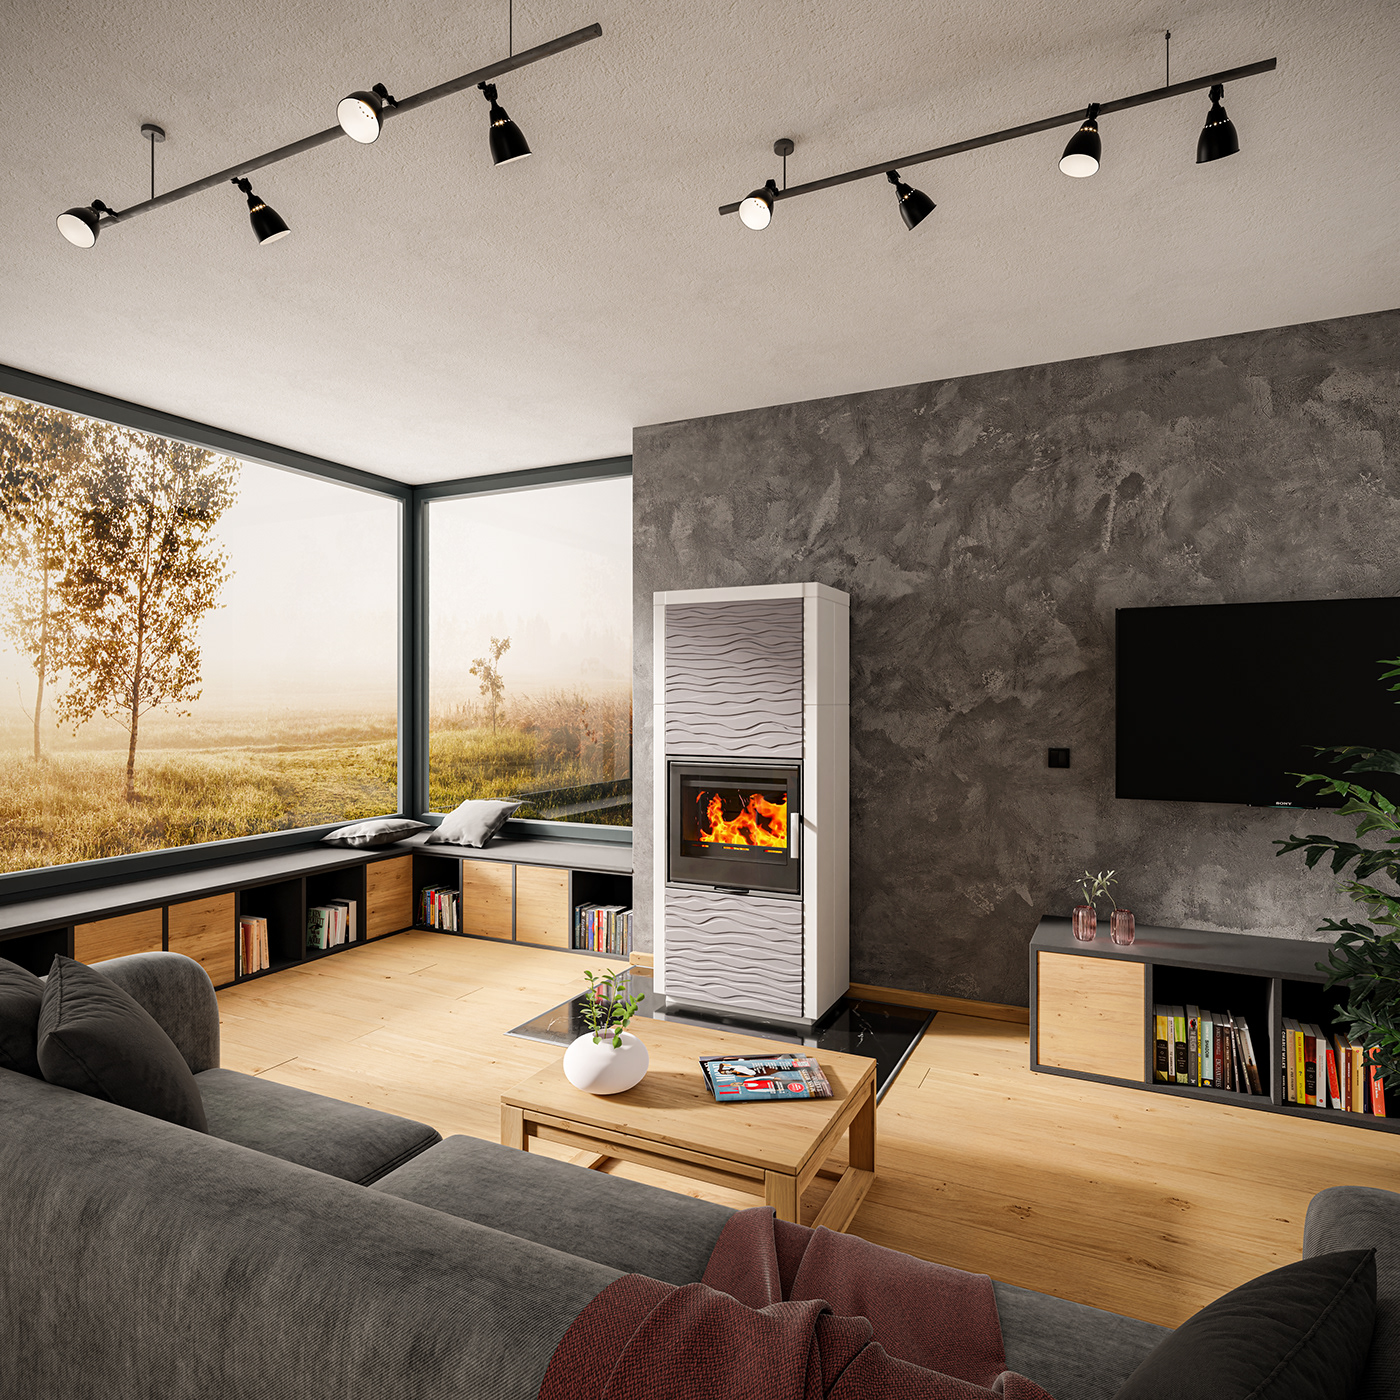 product visualization archviz visualization Render CGI interior design  Interior blender cycles fireplace